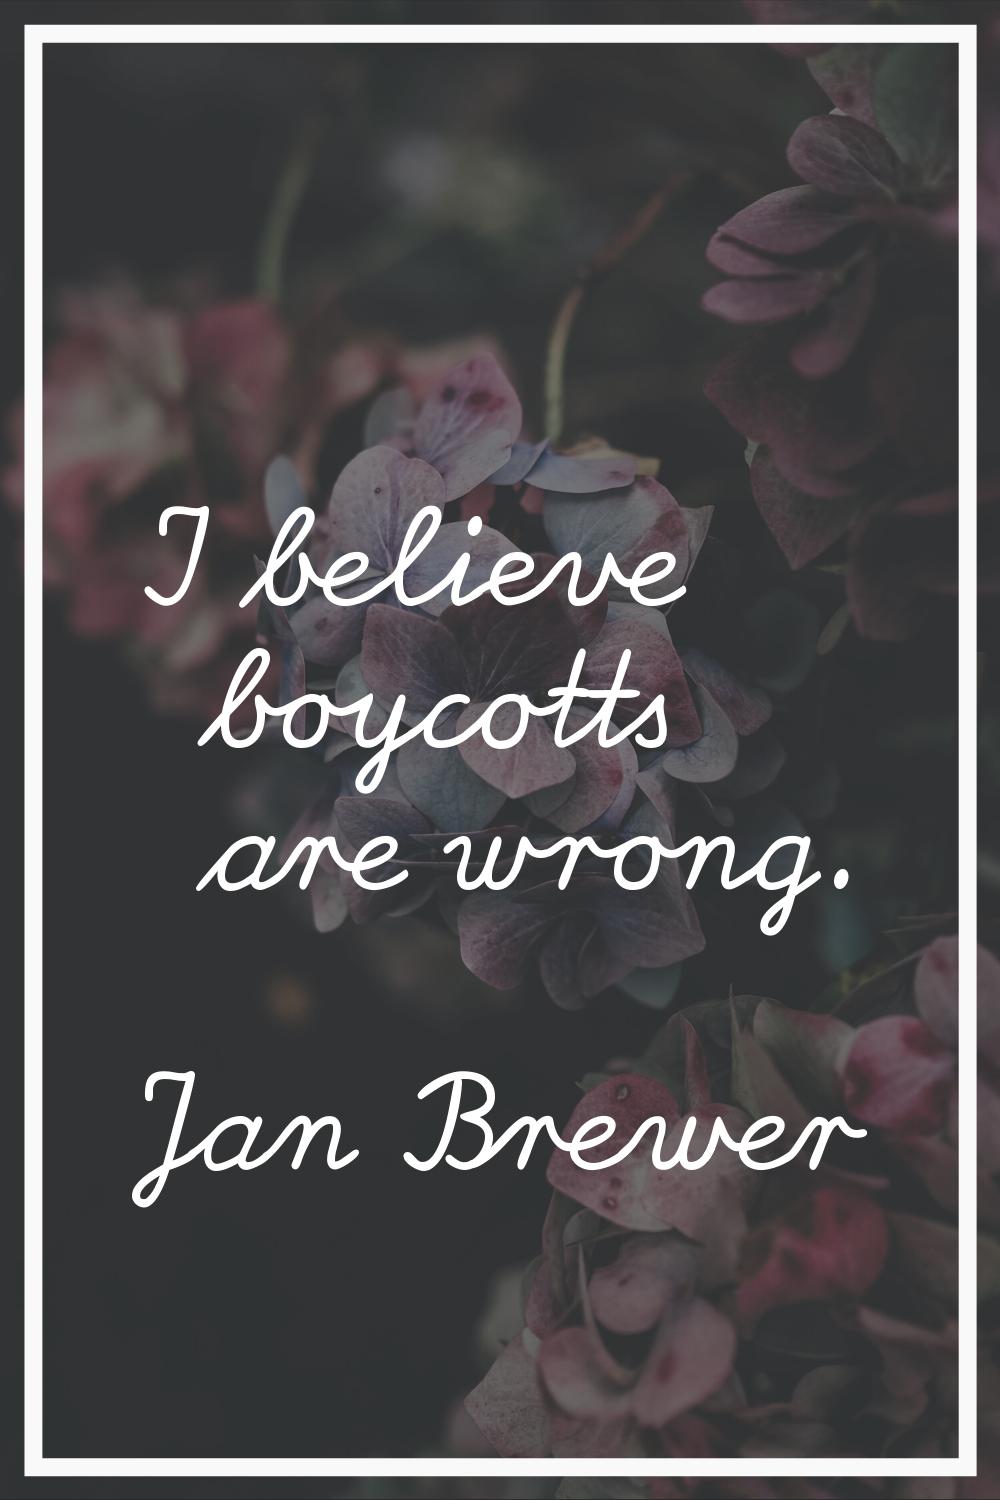 I believe boycotts are wrong.